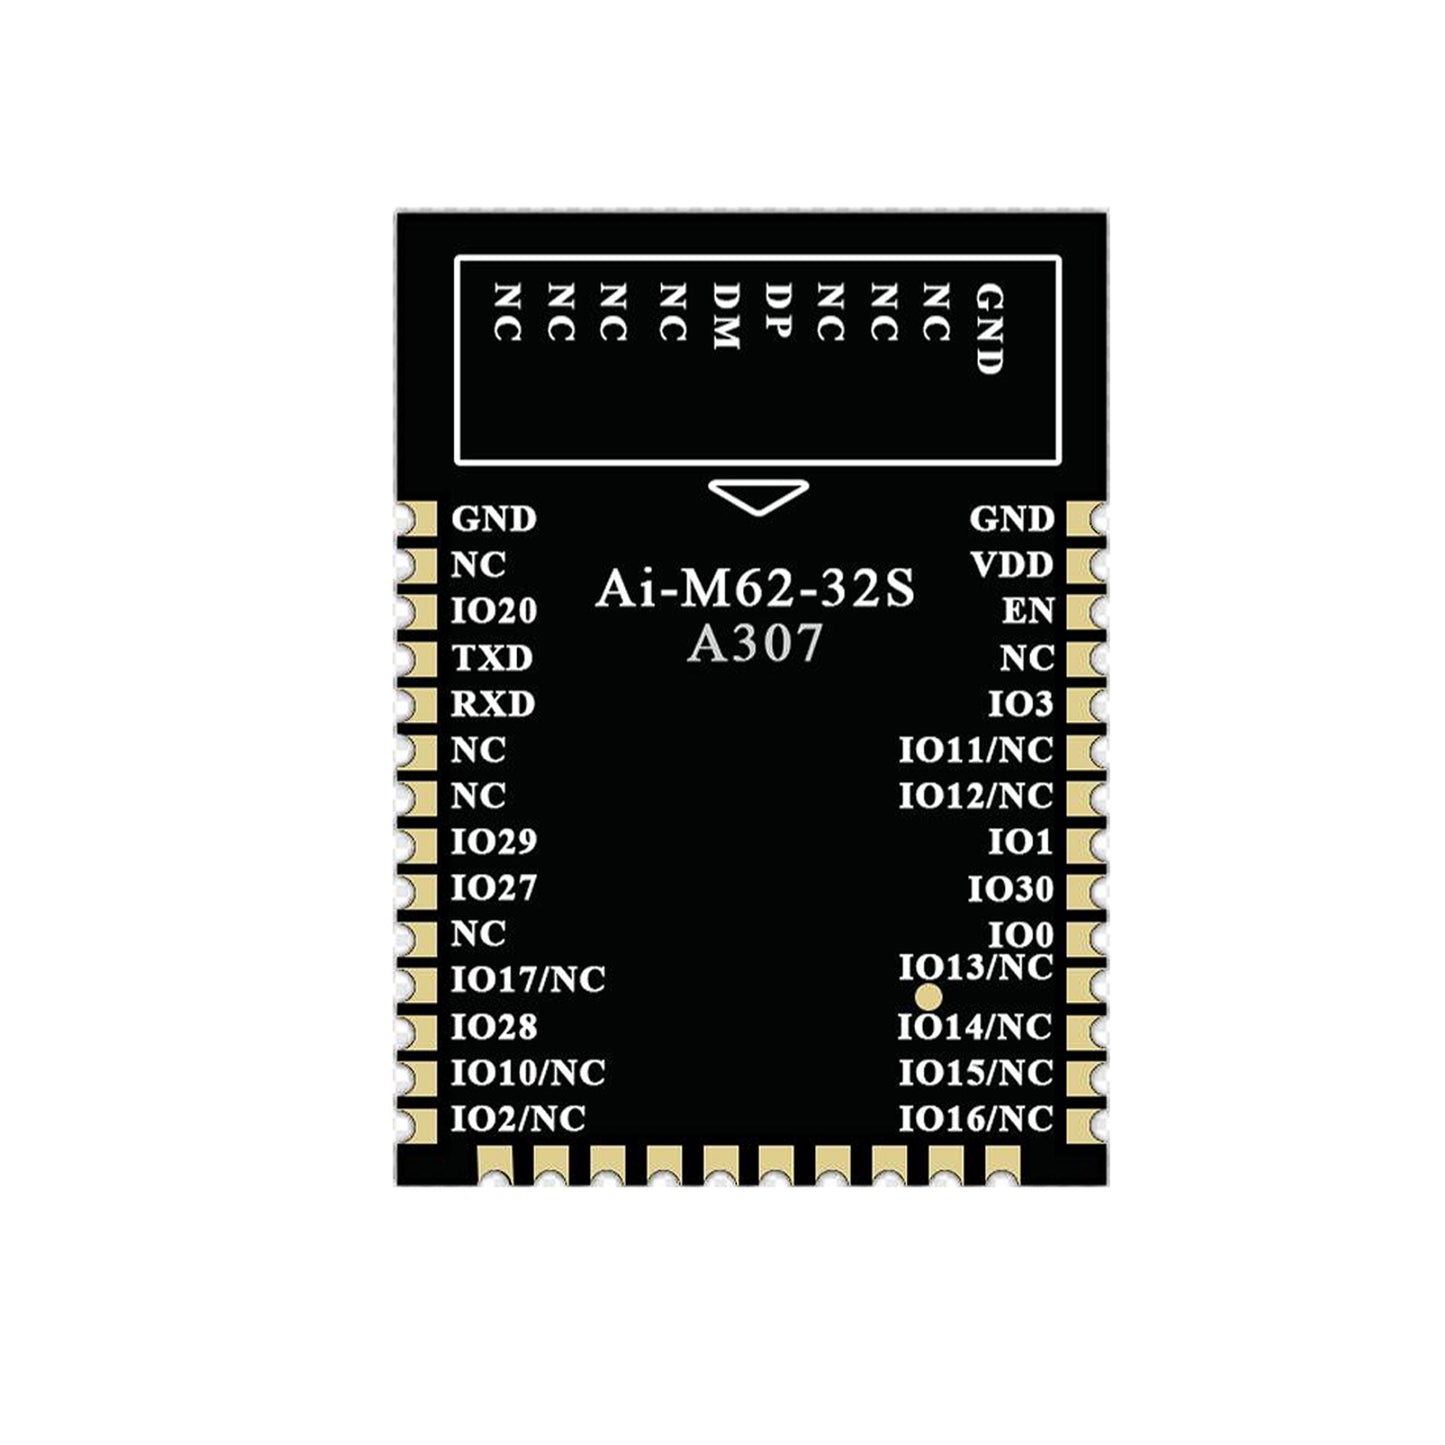 Ai-Thinker Ai-M62-32S Wi-Fi BLE Module - RS5690 - REES52